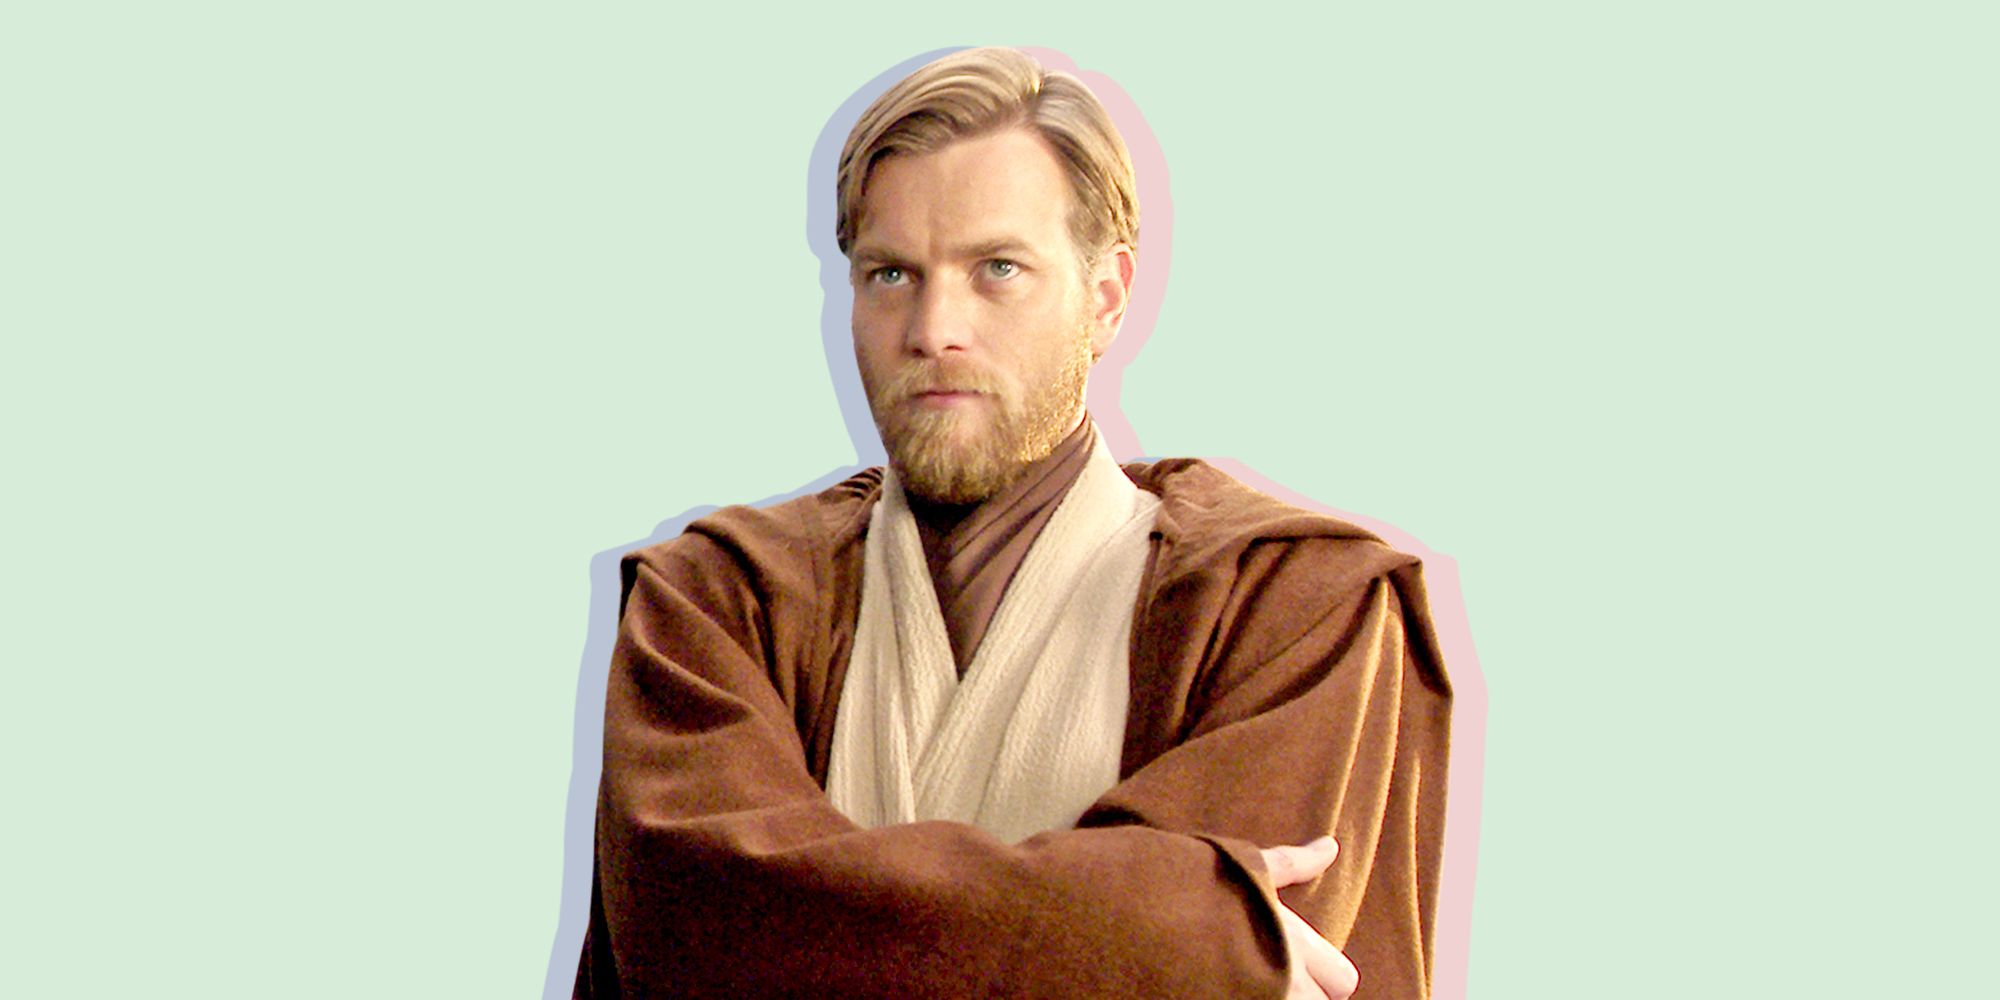 Could Moses Ingram be Playing a Jedi in the Obi-Wan Kenobi Series?